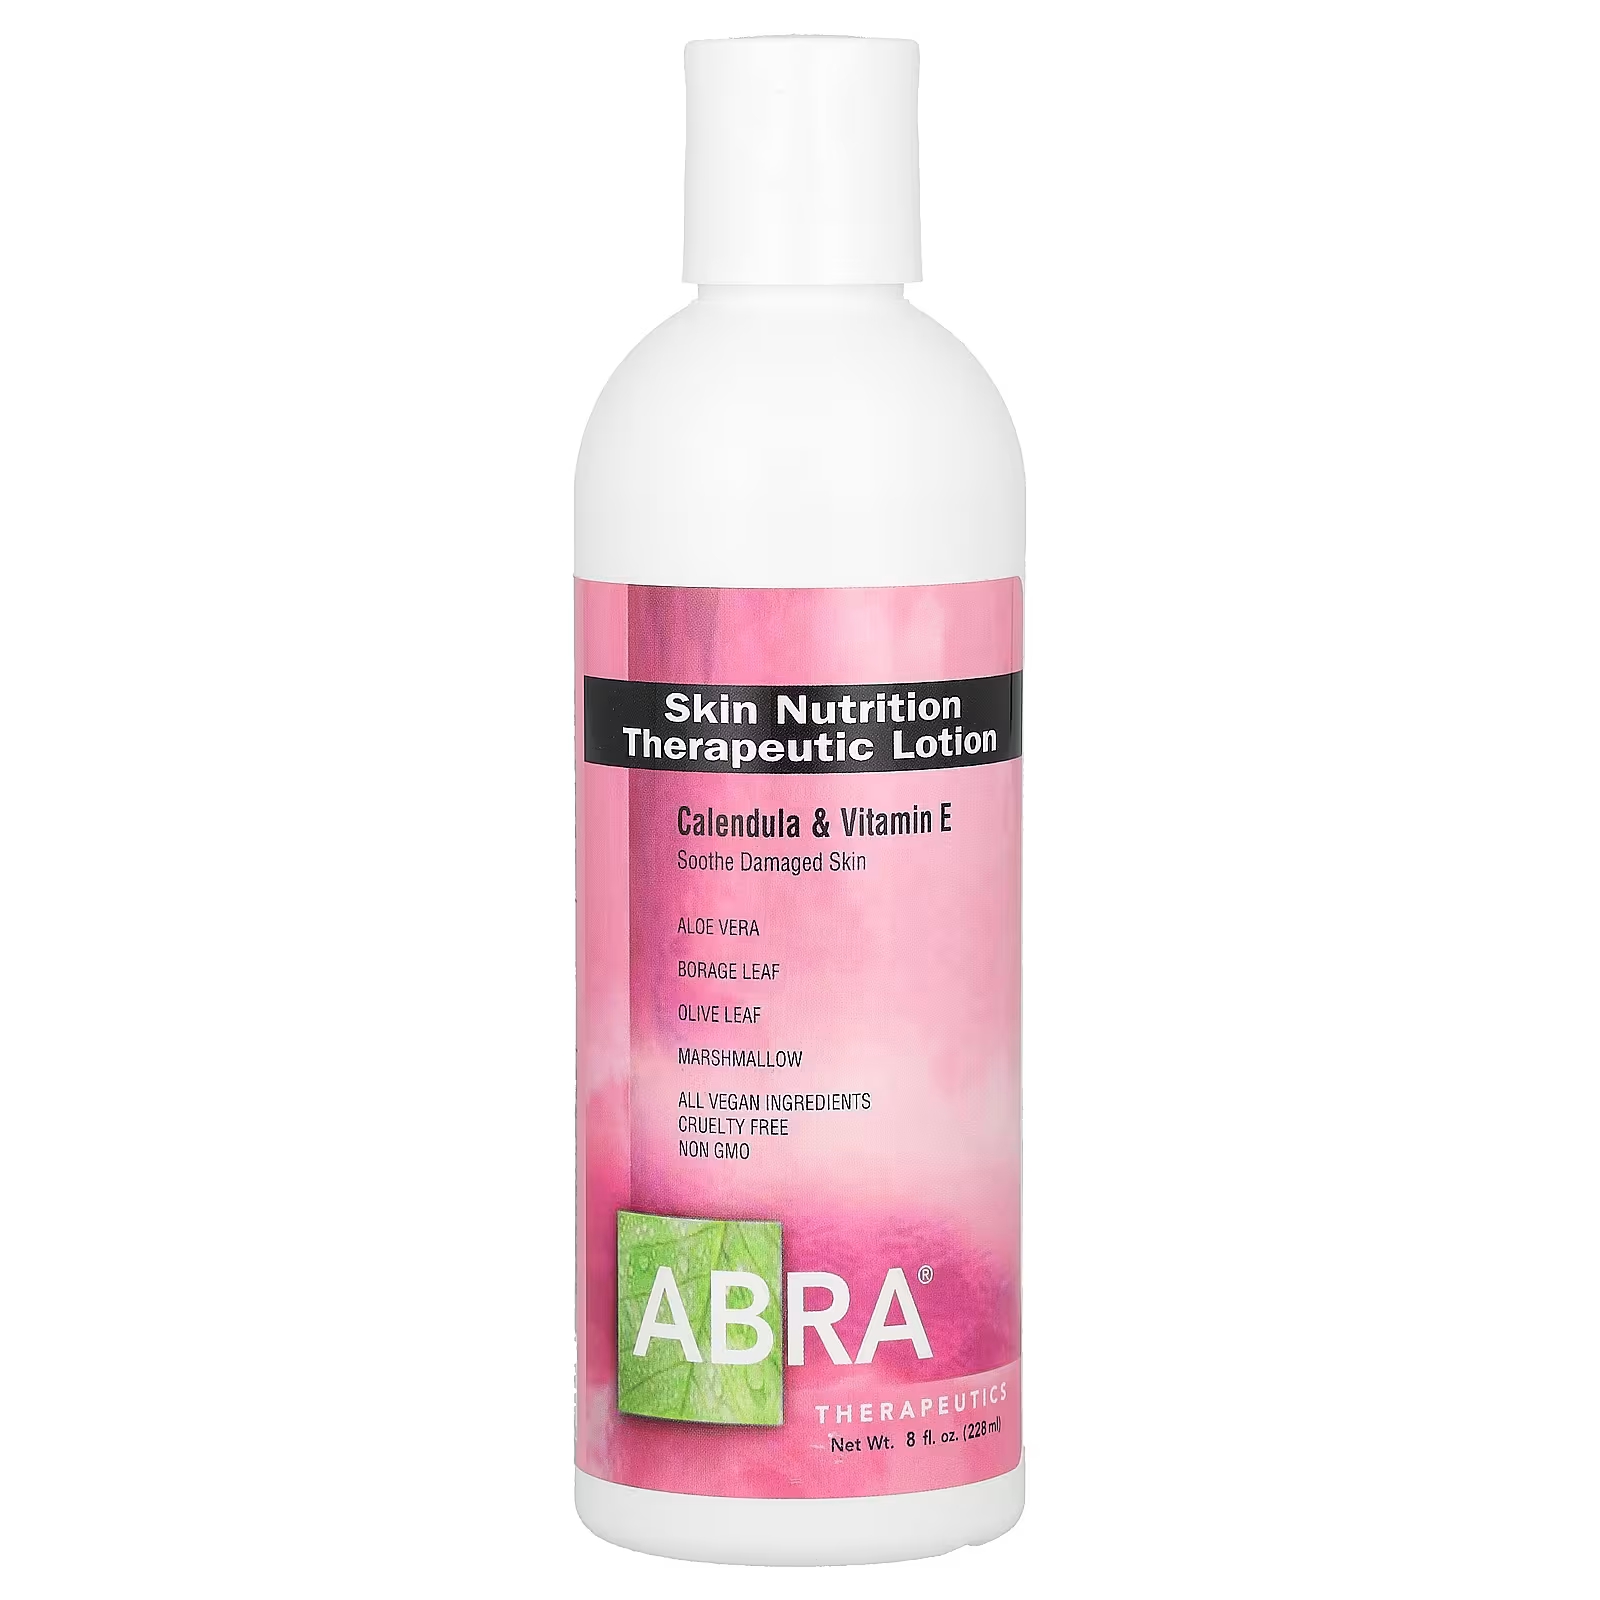 Abracadabra Abra Therapeutics Skin Nutrition Терапевтический лосьон, 8 жидких унций (228 мл) Abracadabra, Abra Therapeutics фото